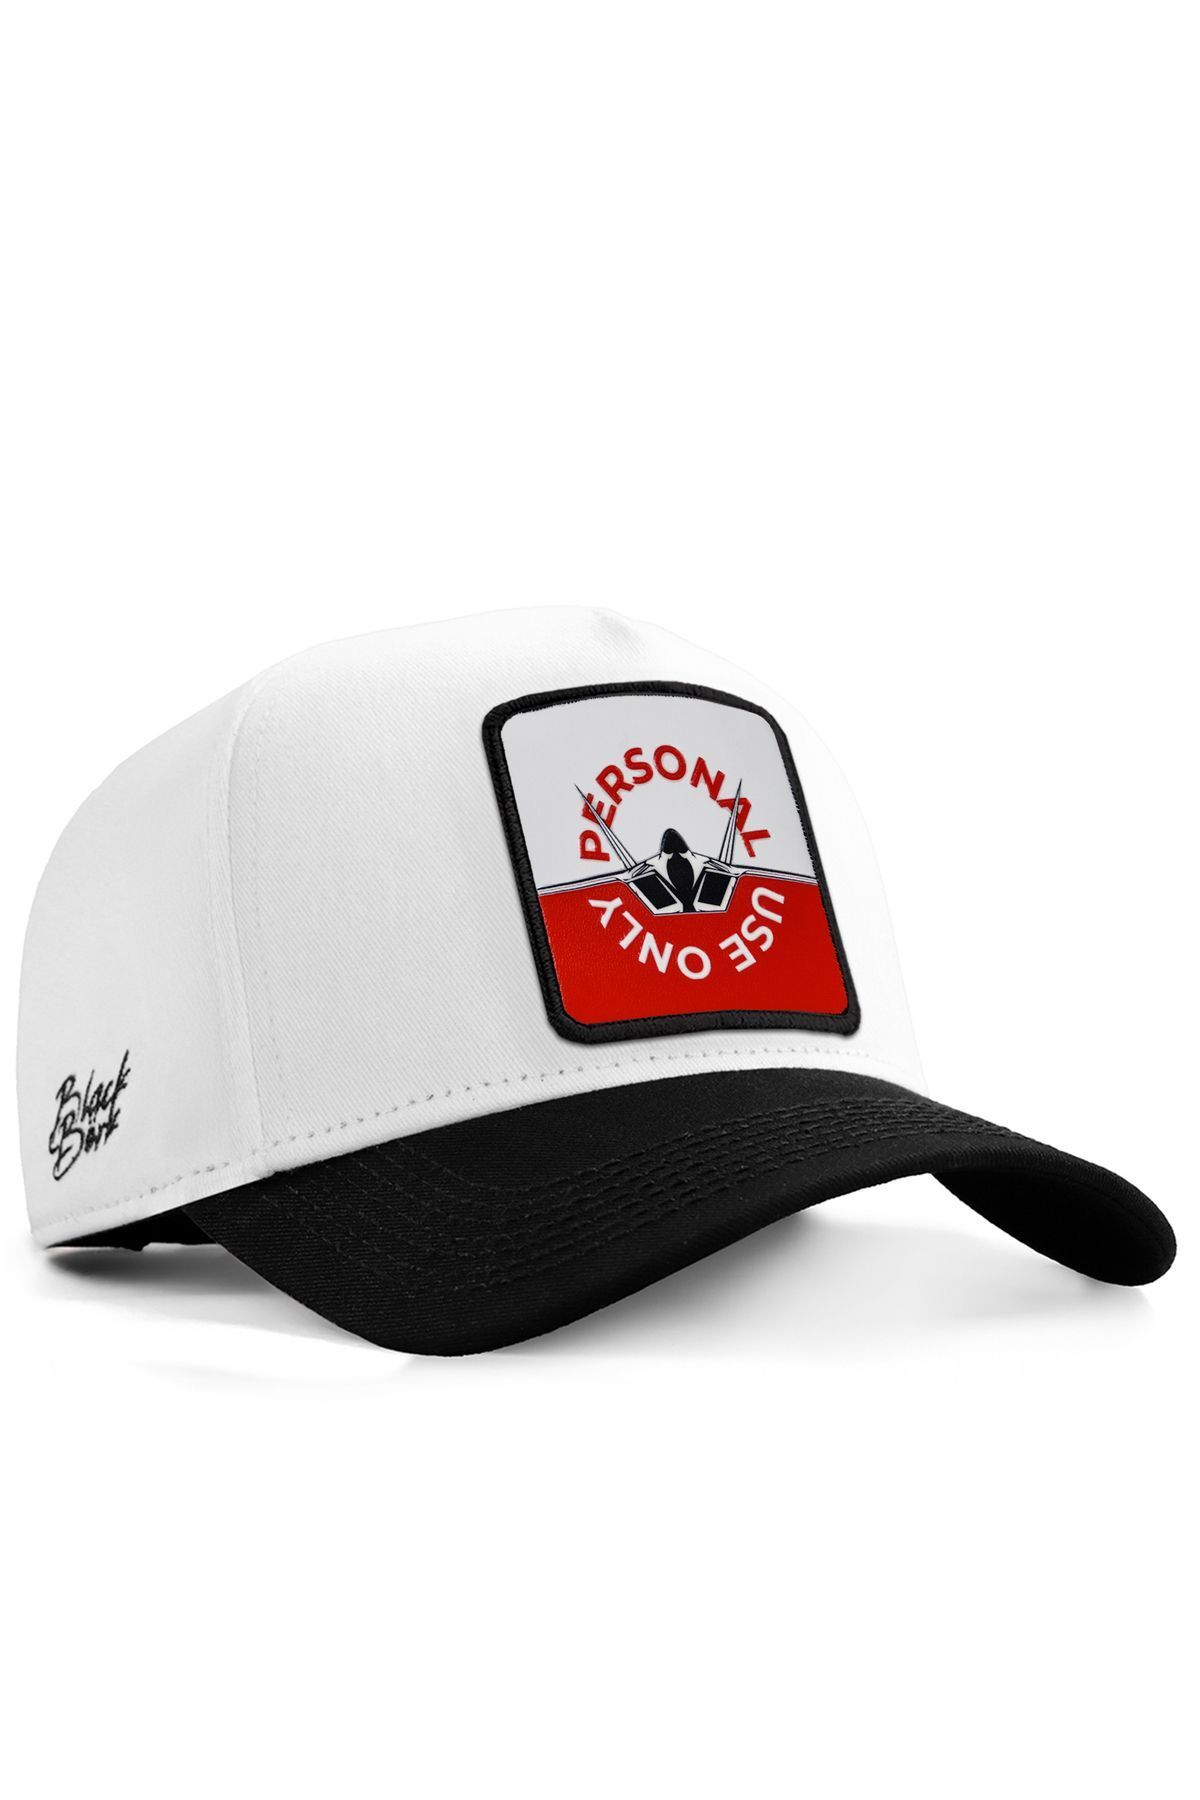 BlackBörk V1 Baseball Kahraman Kaan Lisanlı Beyaz-siyah Siperli Şapka